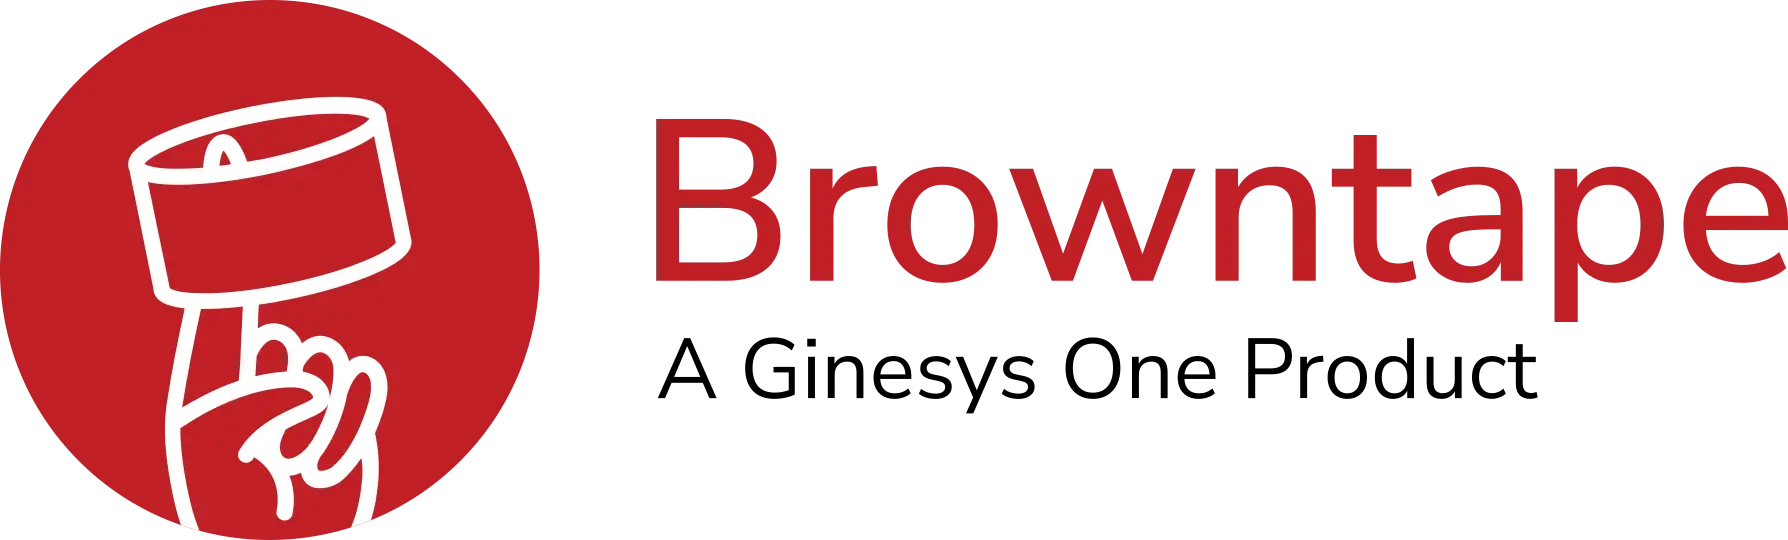 BrownTape-logo